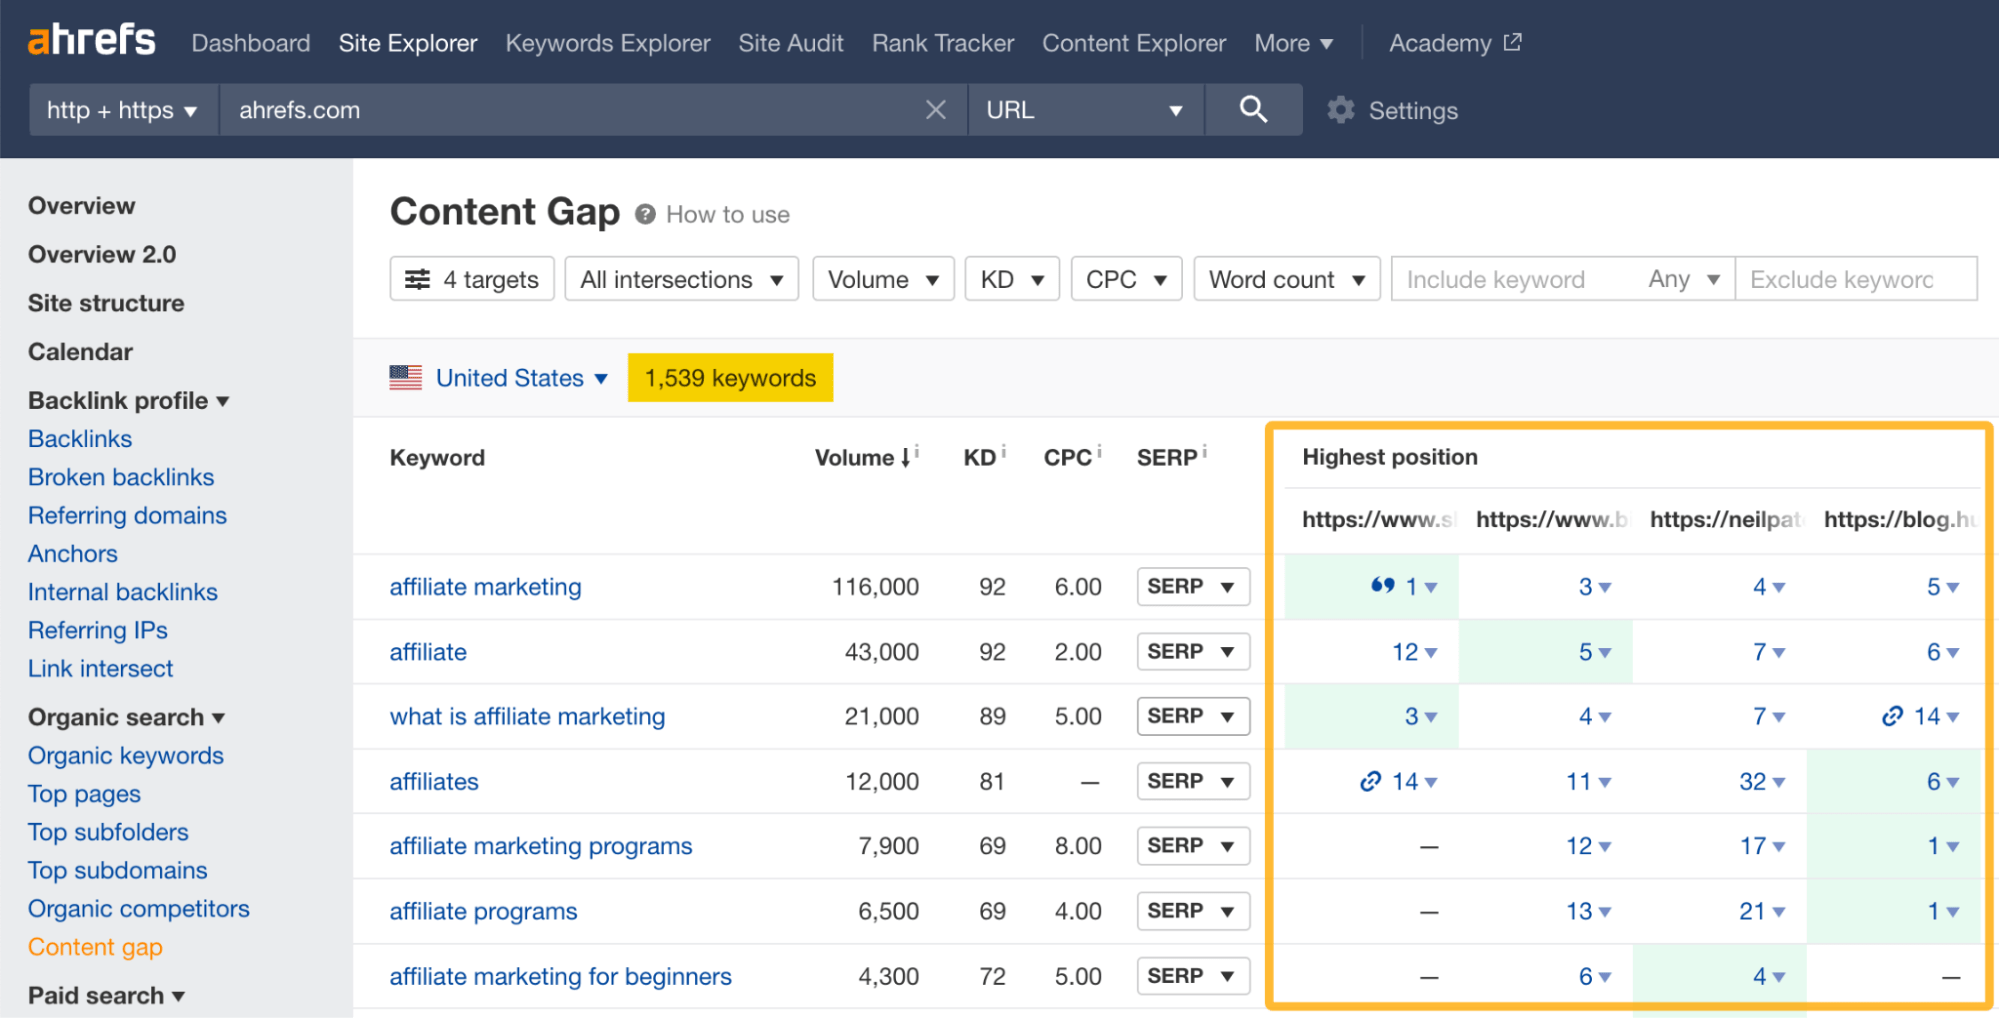 Content Gap tool, via Ahrefs' Site Explorer